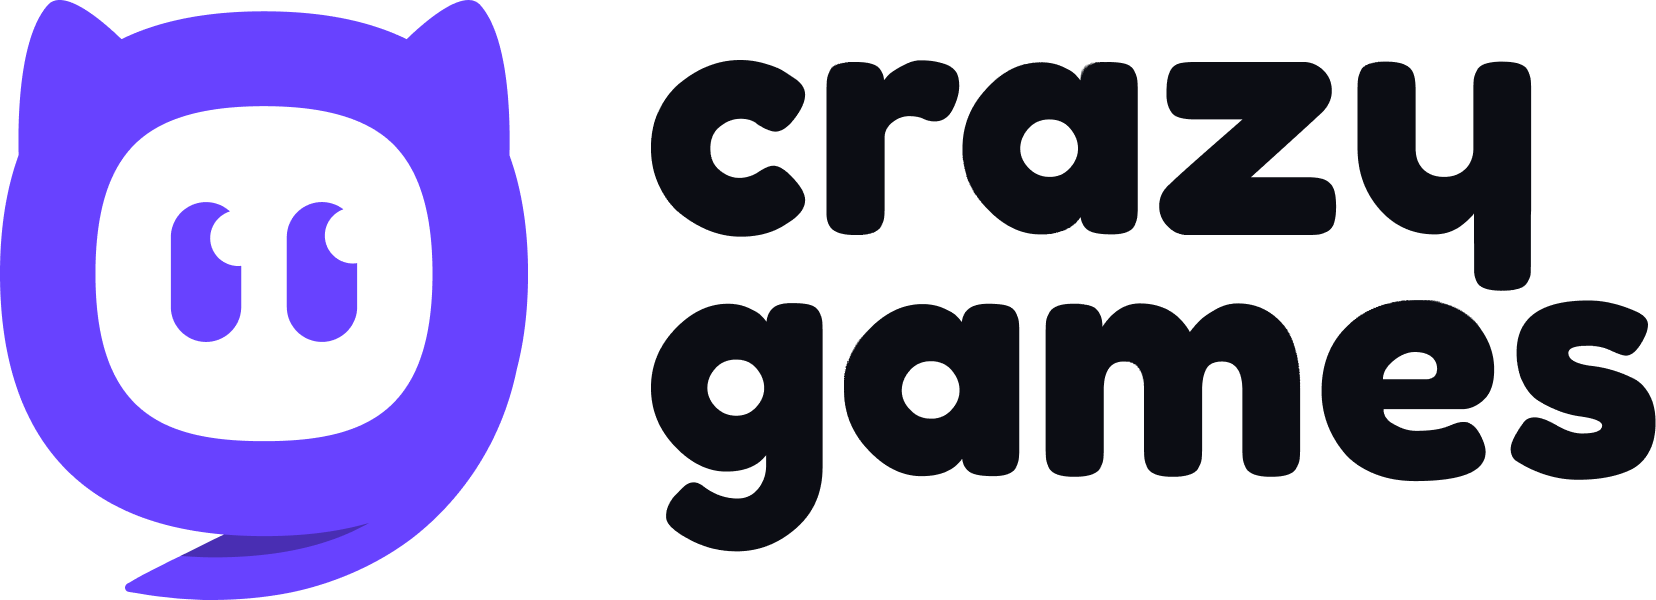 New games - CrazyGames